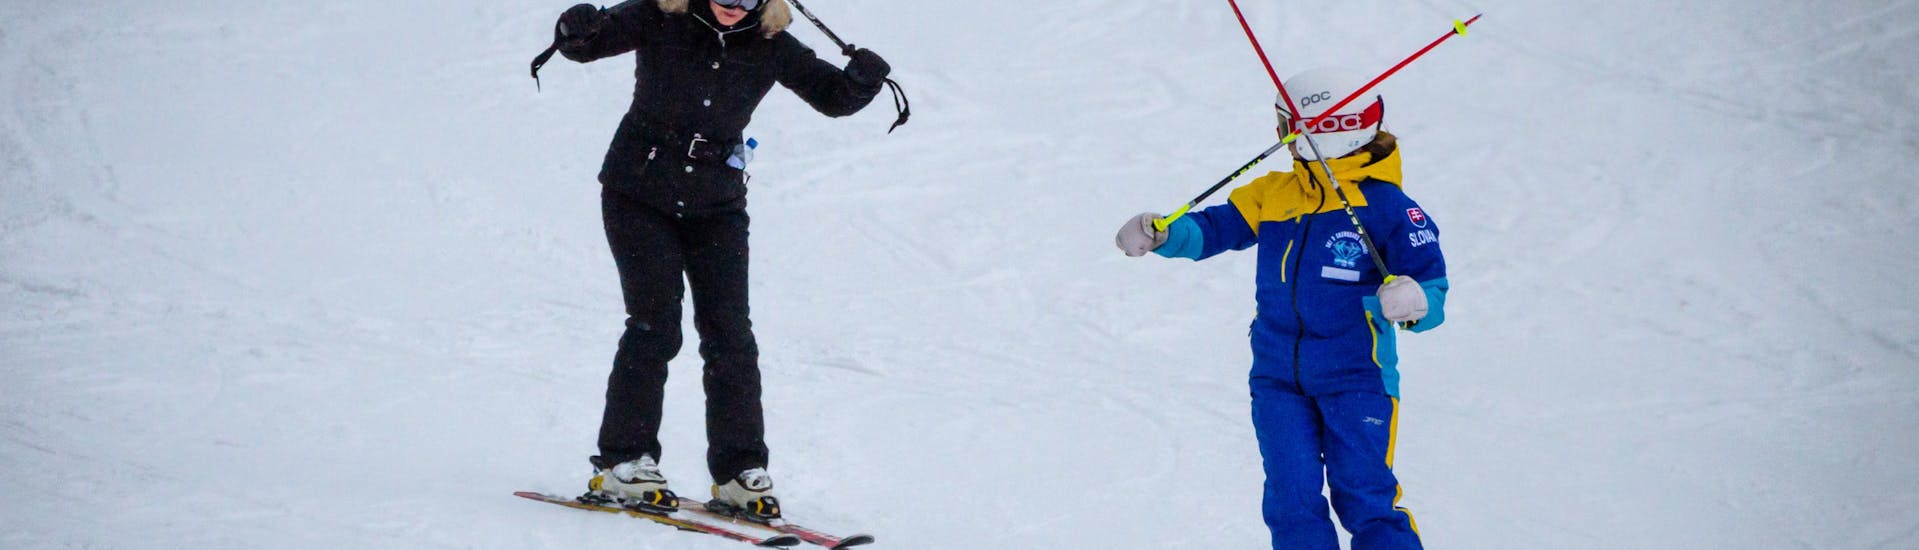 Private Ski Lessons for Adults of All Levels from Crystal Ski  Demänovská Dolina.